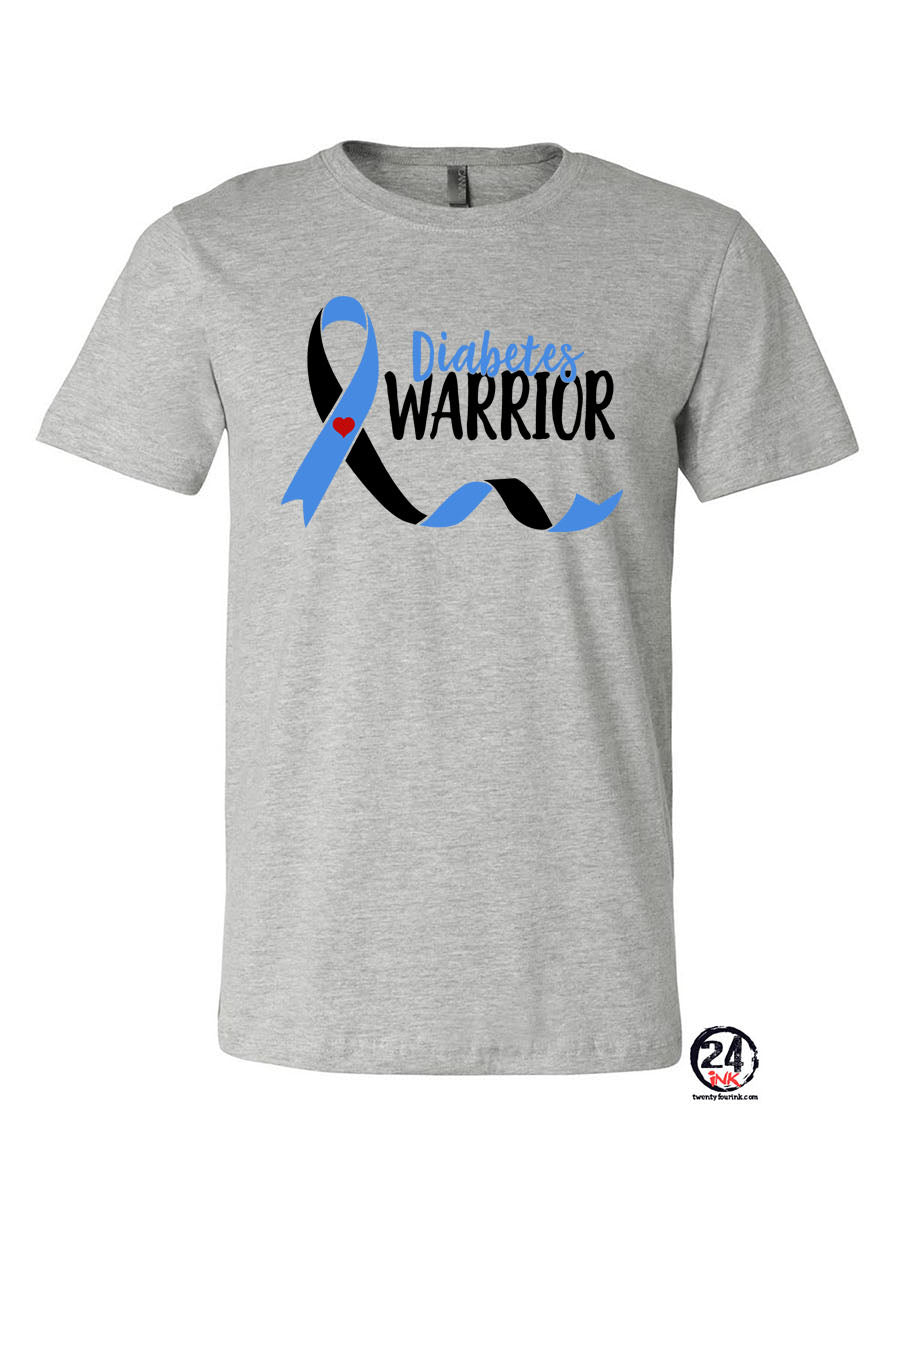 McKeown Diabetes Warrior T-Shirt